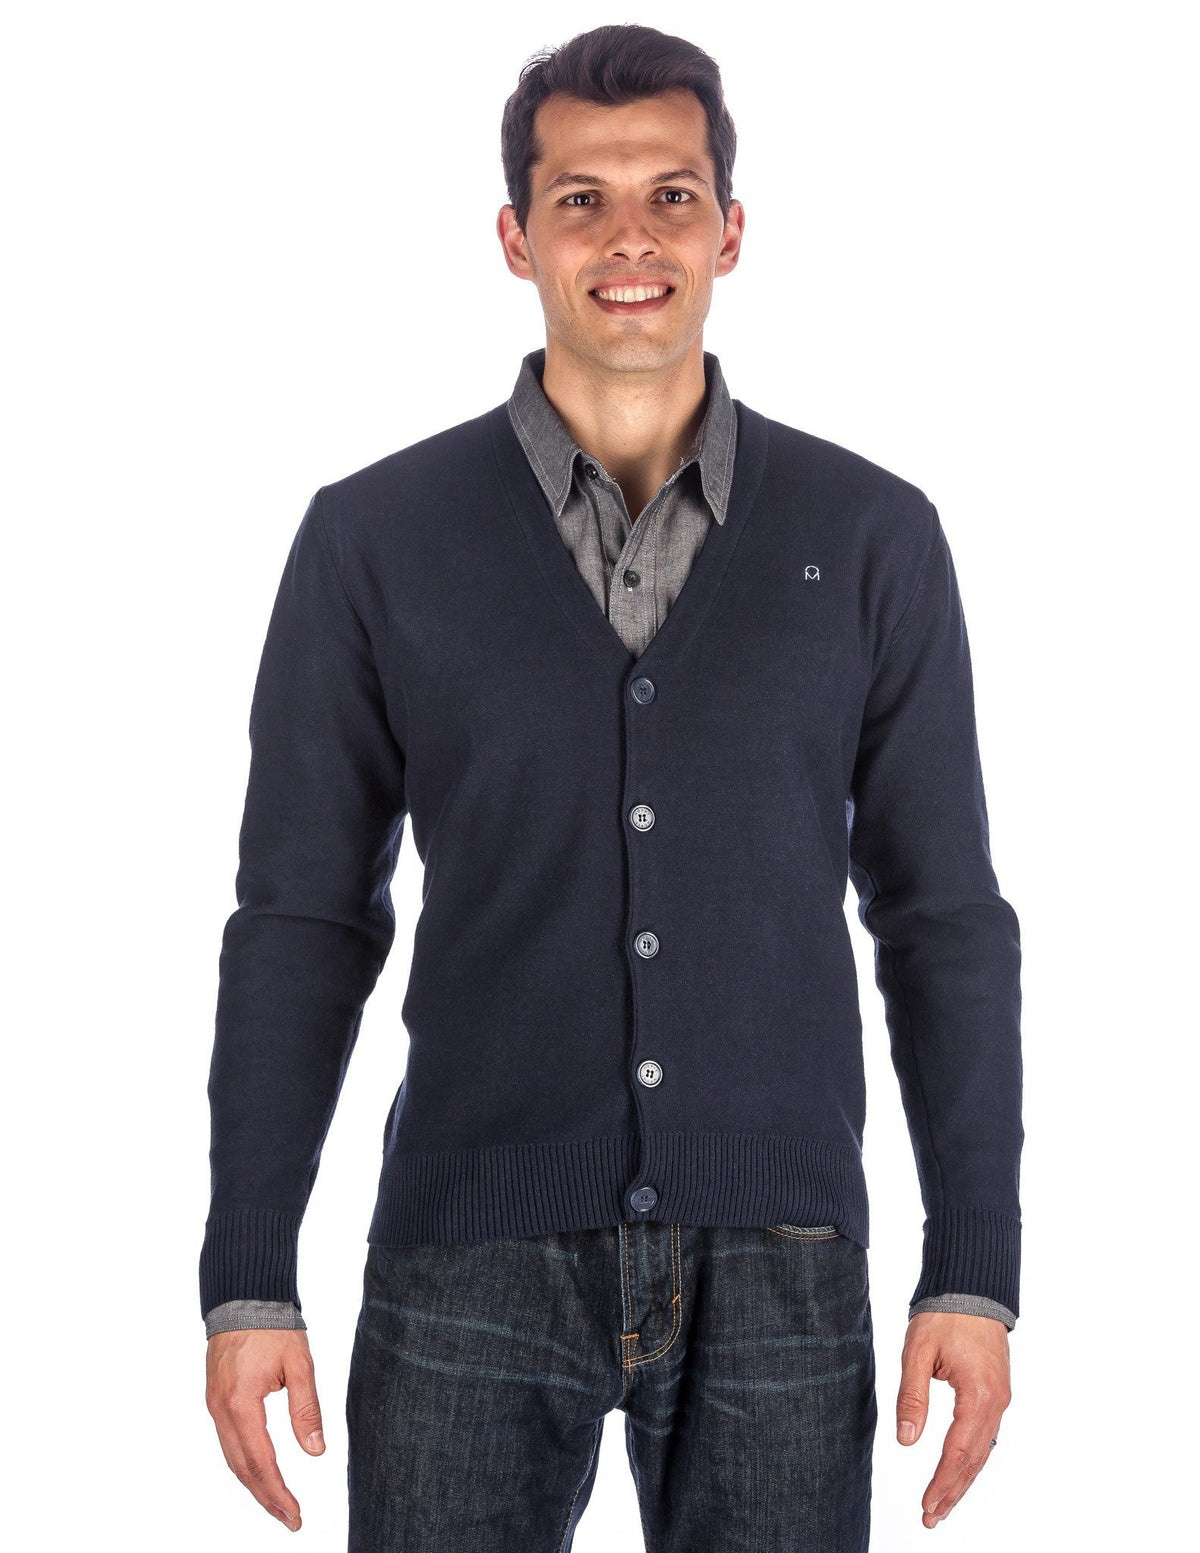 Men's 100% Cotton Cardigan Sweater - Navy